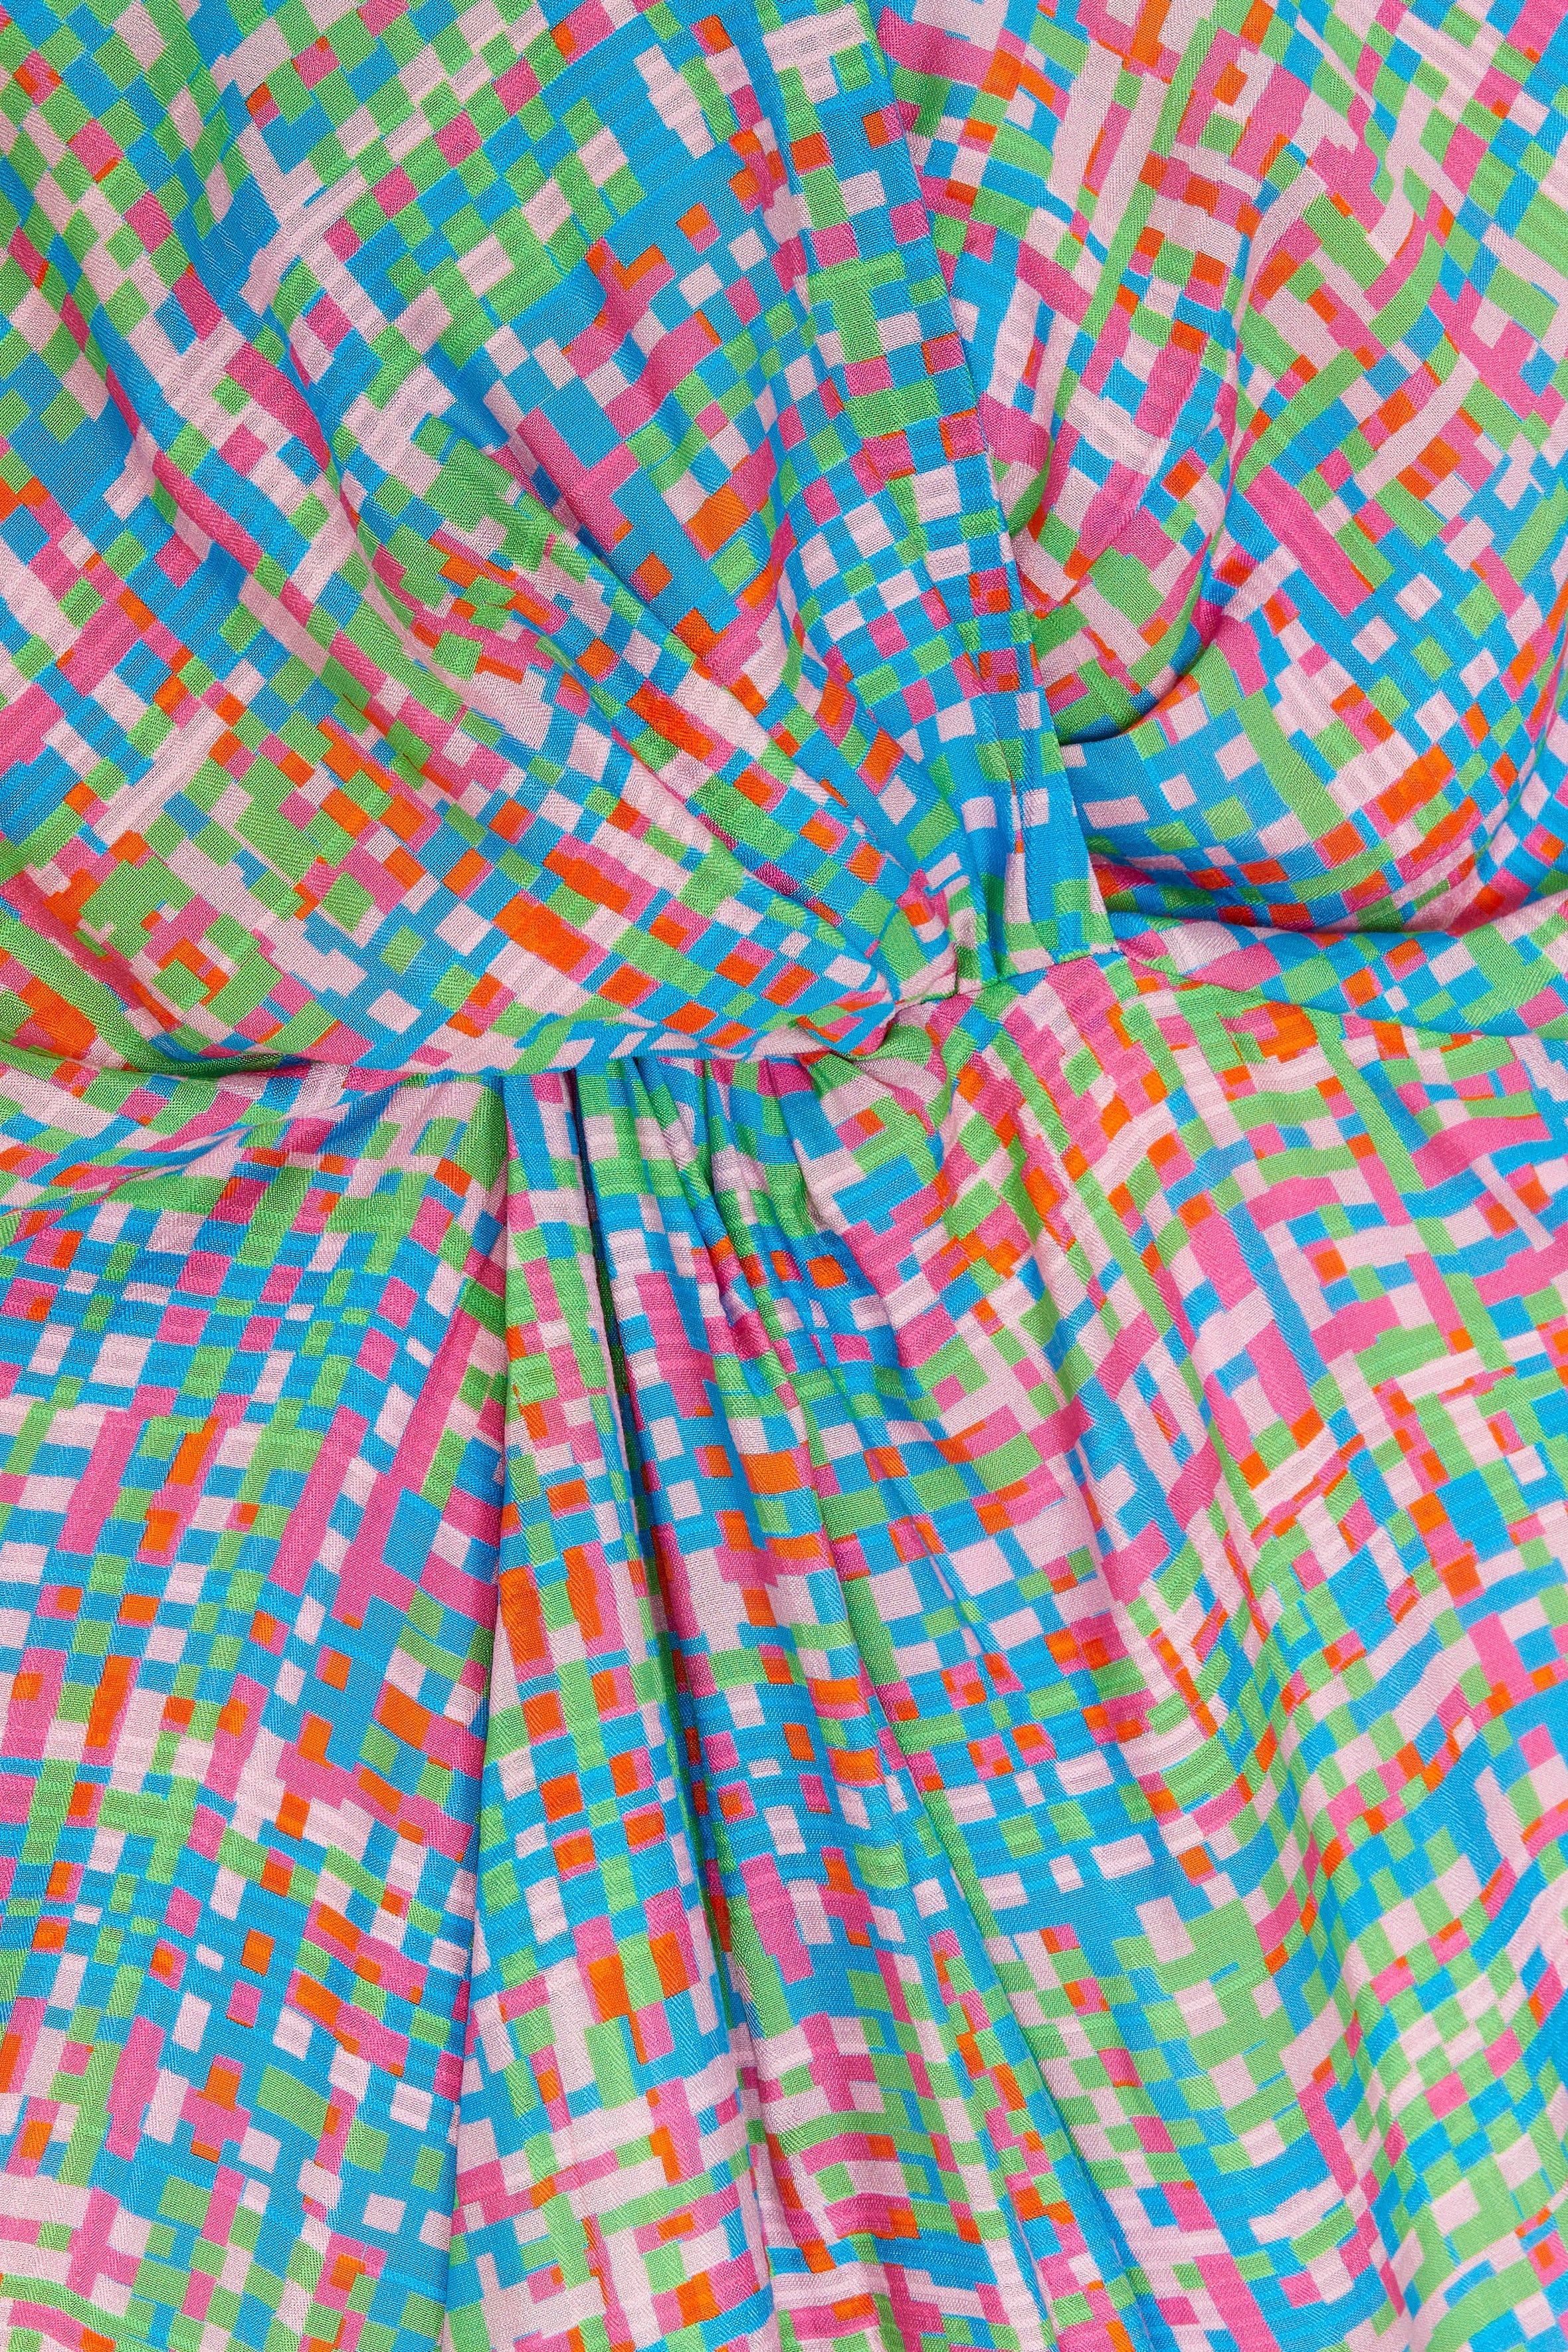 CKS Dames - DEMOS - robe courte - multicolore